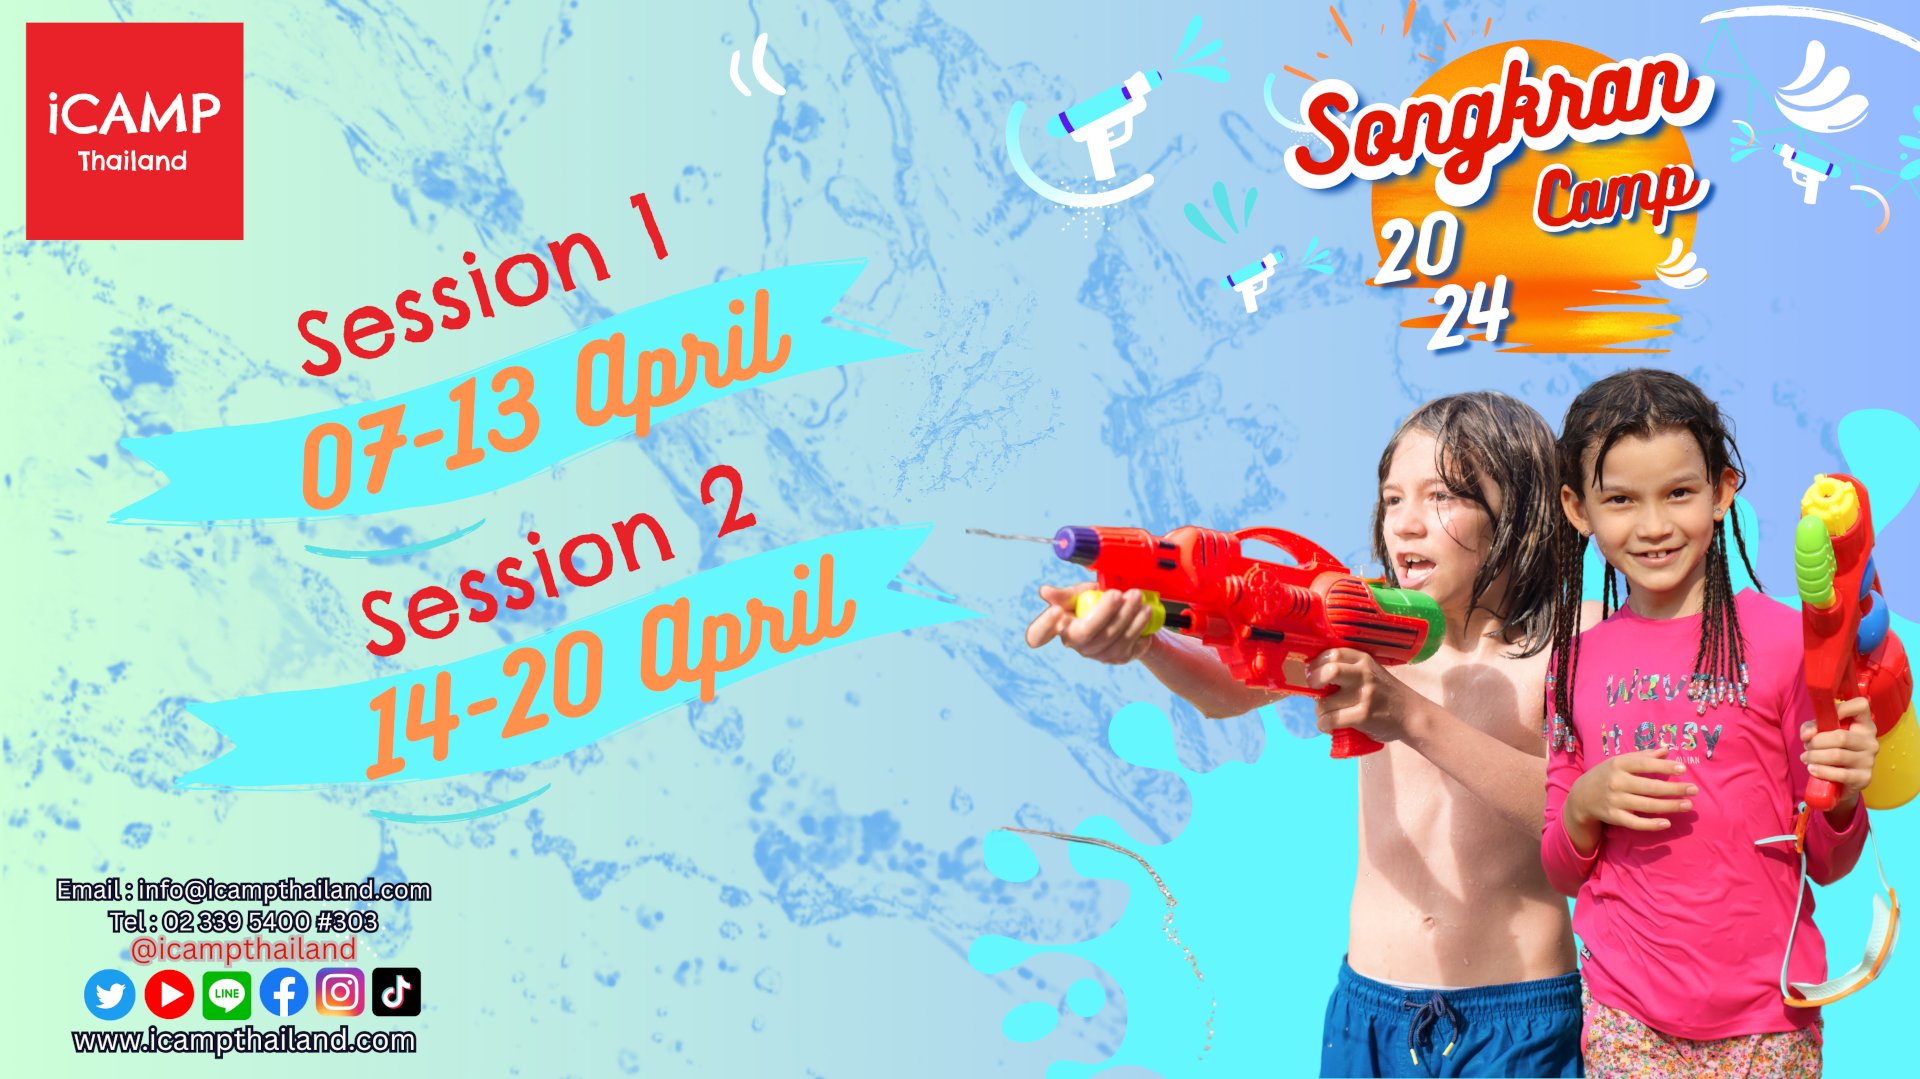 Songkran Camp for kids